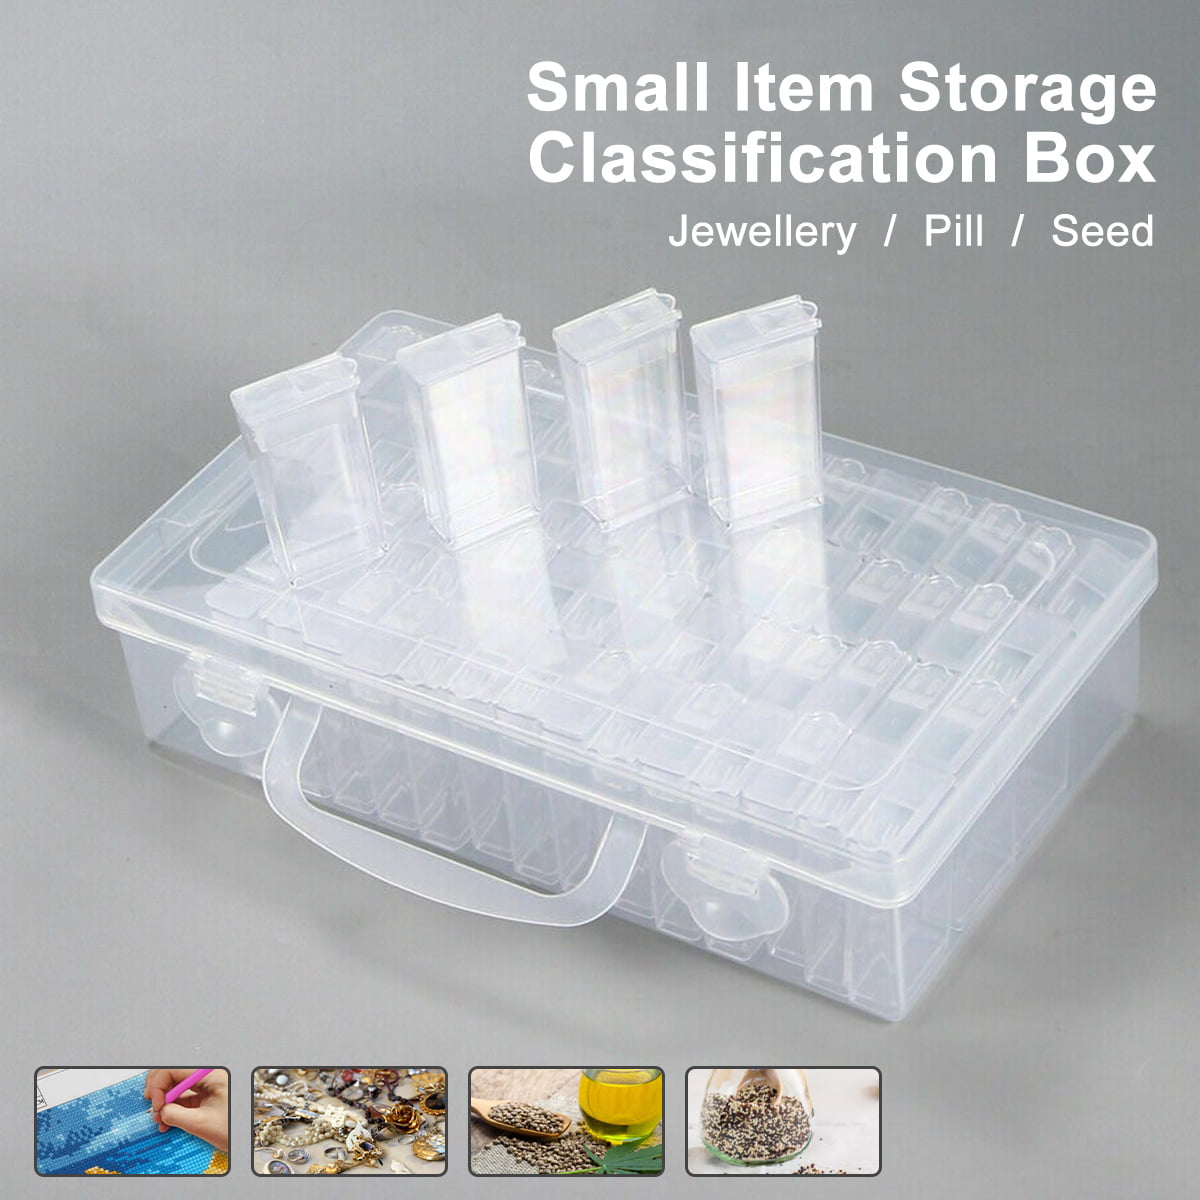 64 Slots Plastic Seed Storage Organizer BoxTransparent Reusable